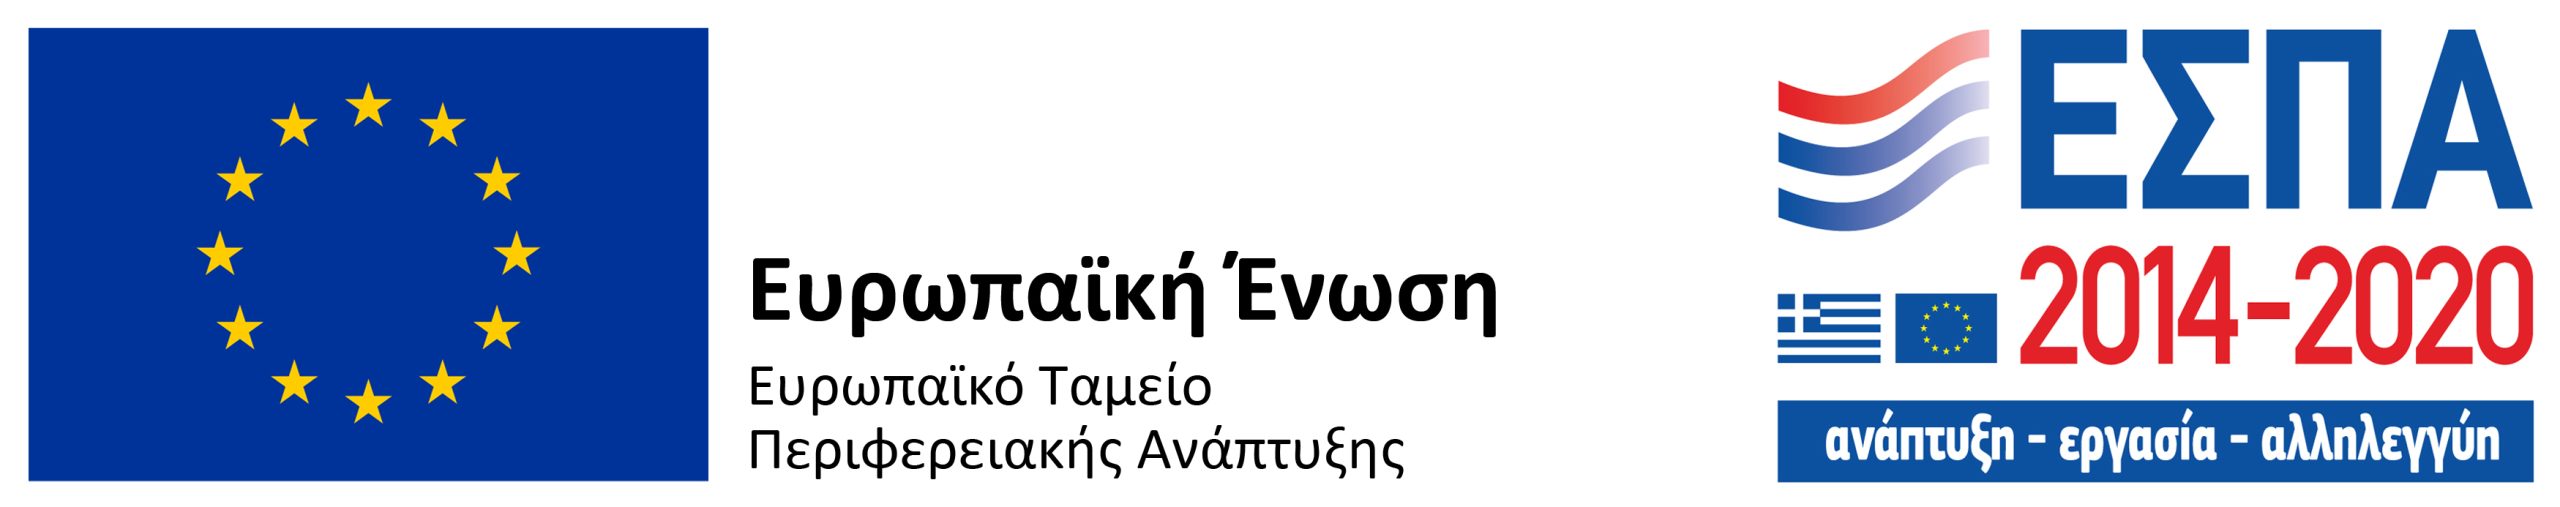 1 banner ελληνικα